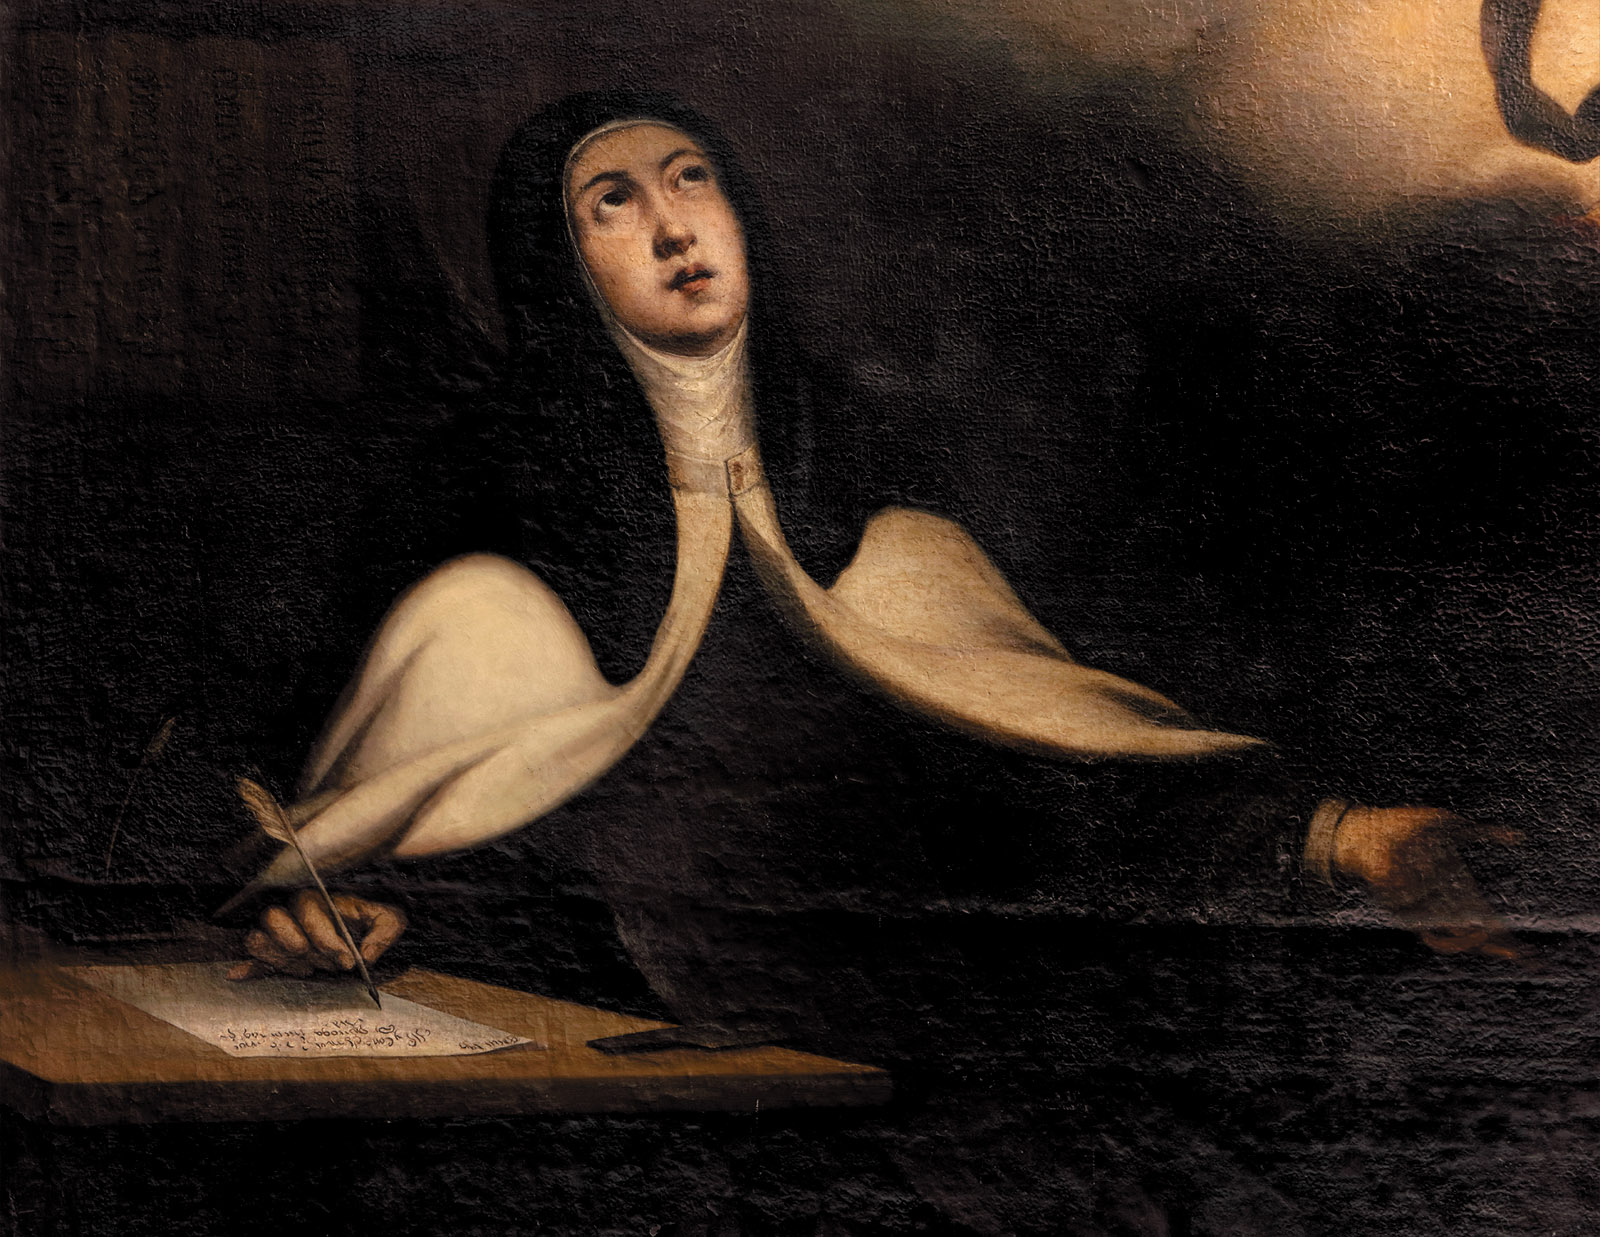 Teresa of Ávila